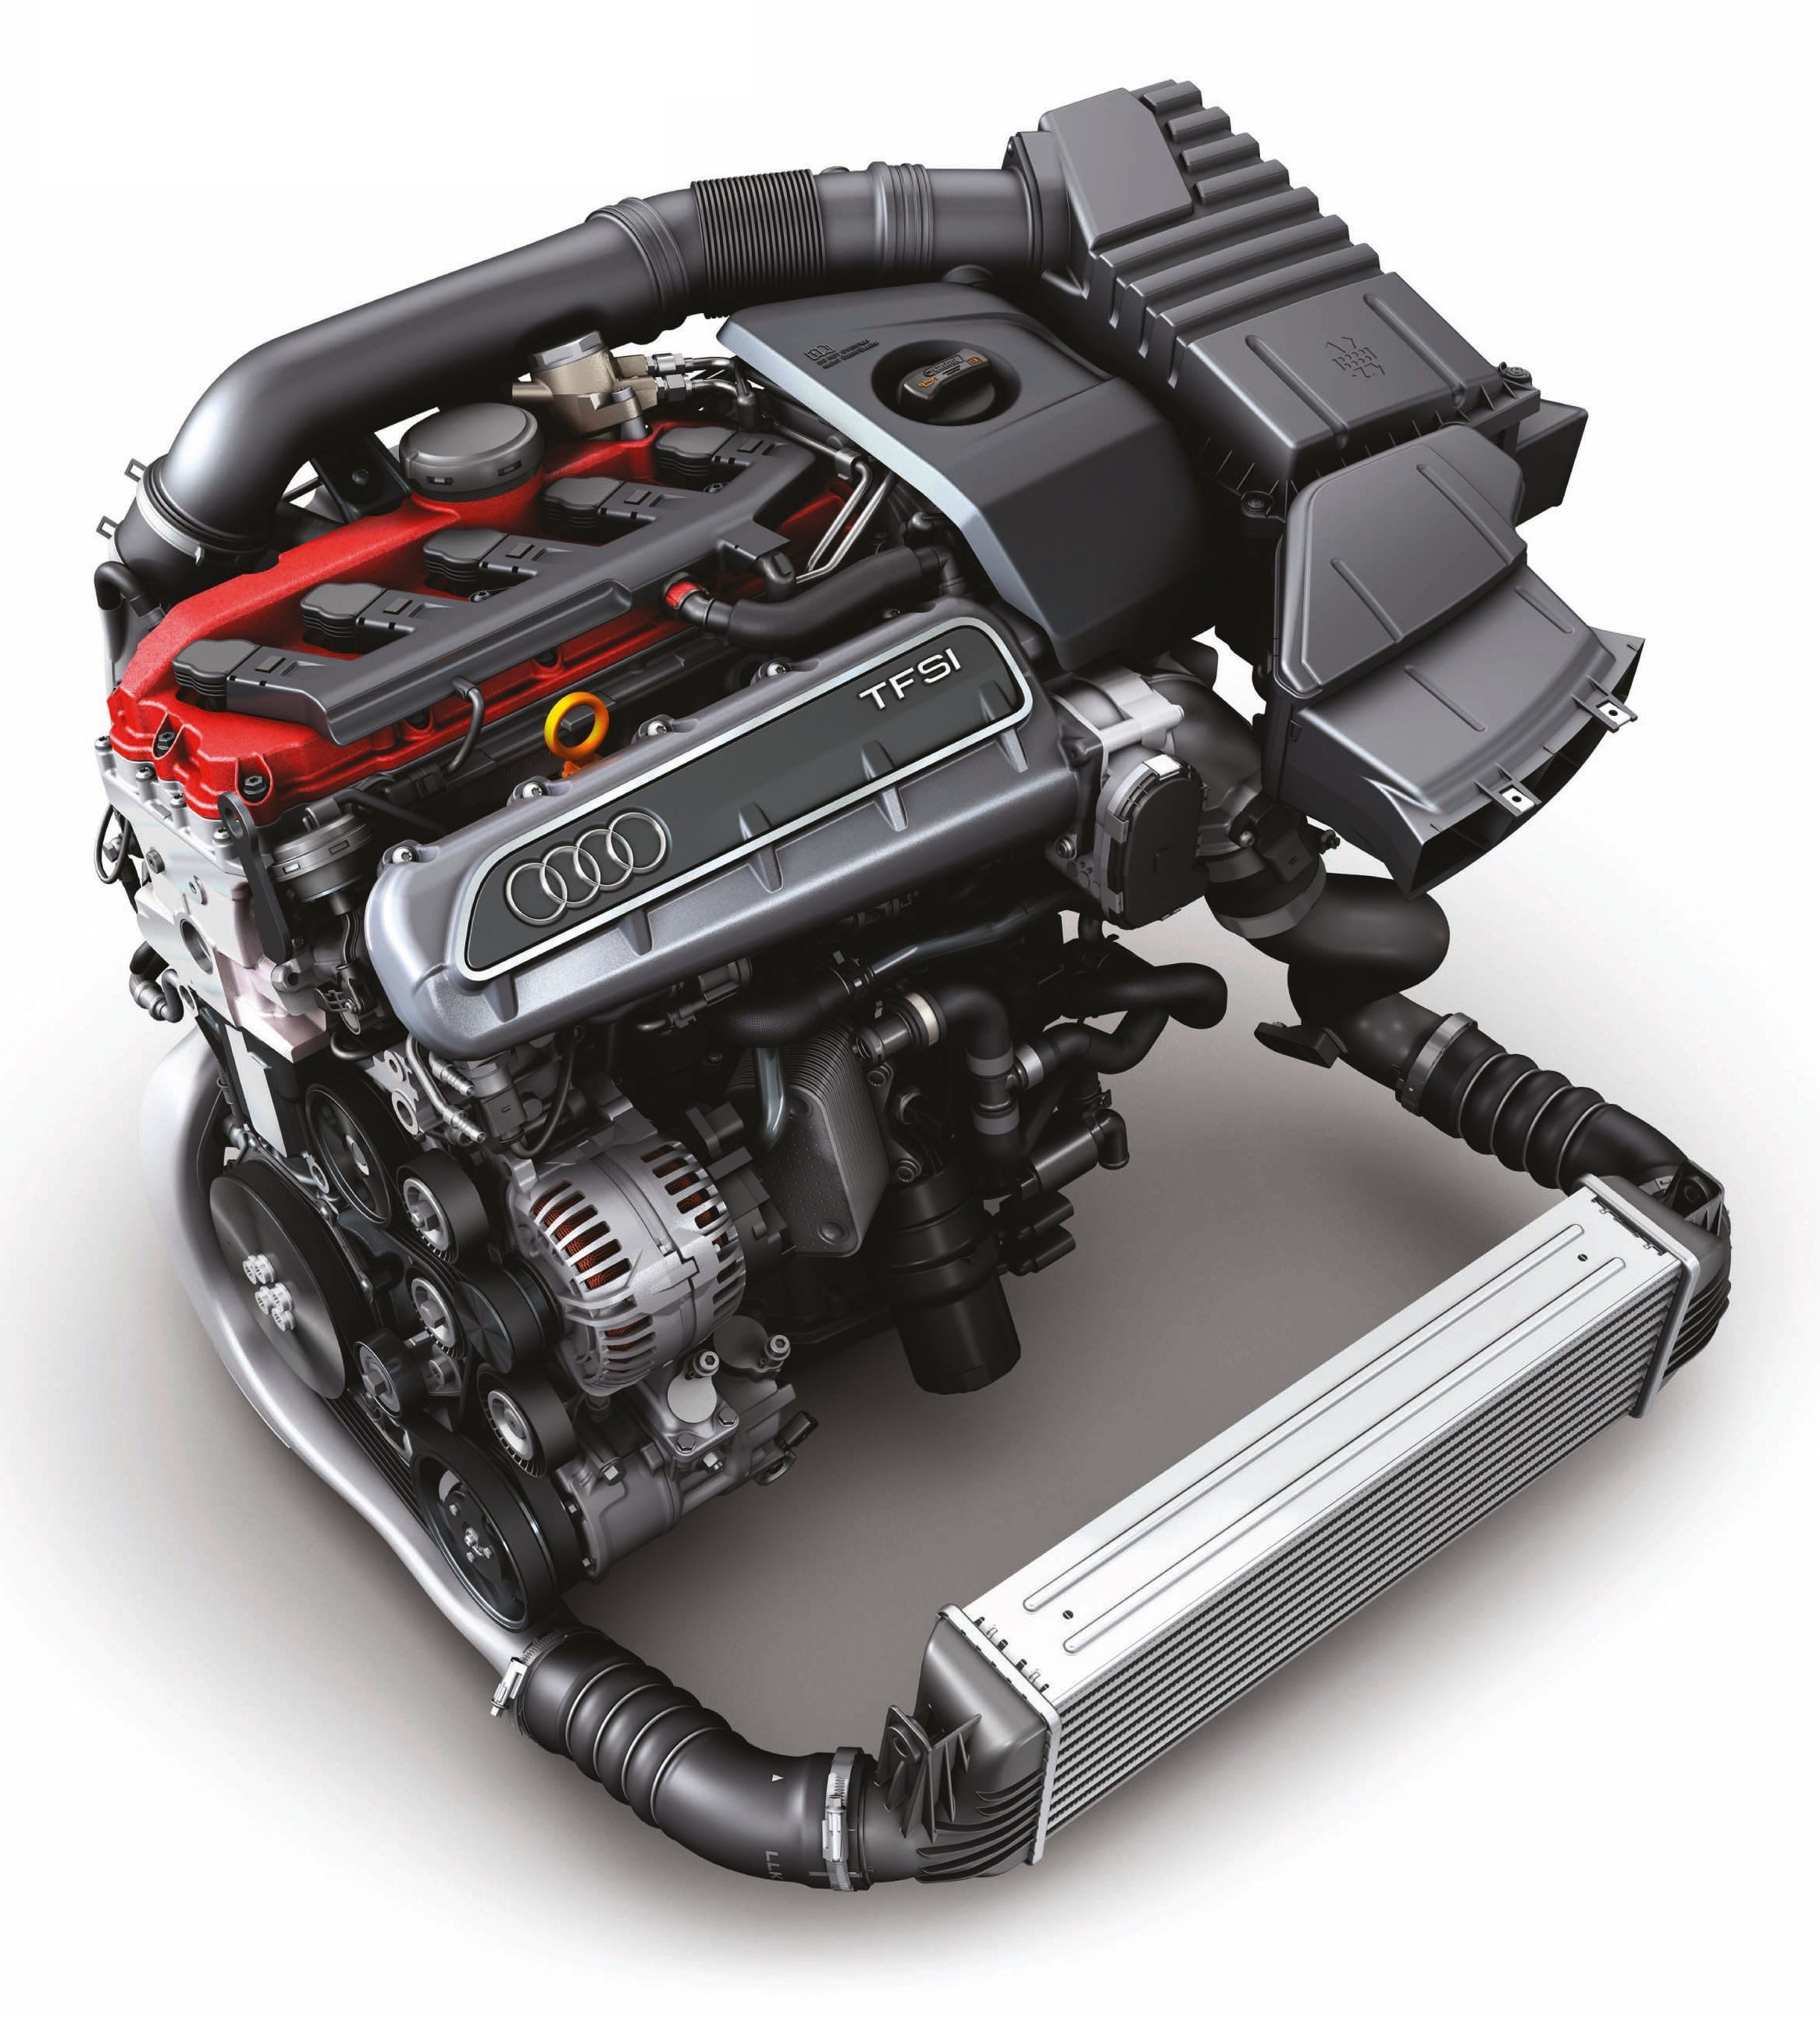 Volkswagen Engine Diagram ìì°ë ì ì ìì§ æ Cars Pinterest Of Volkswagen Engine Diagram